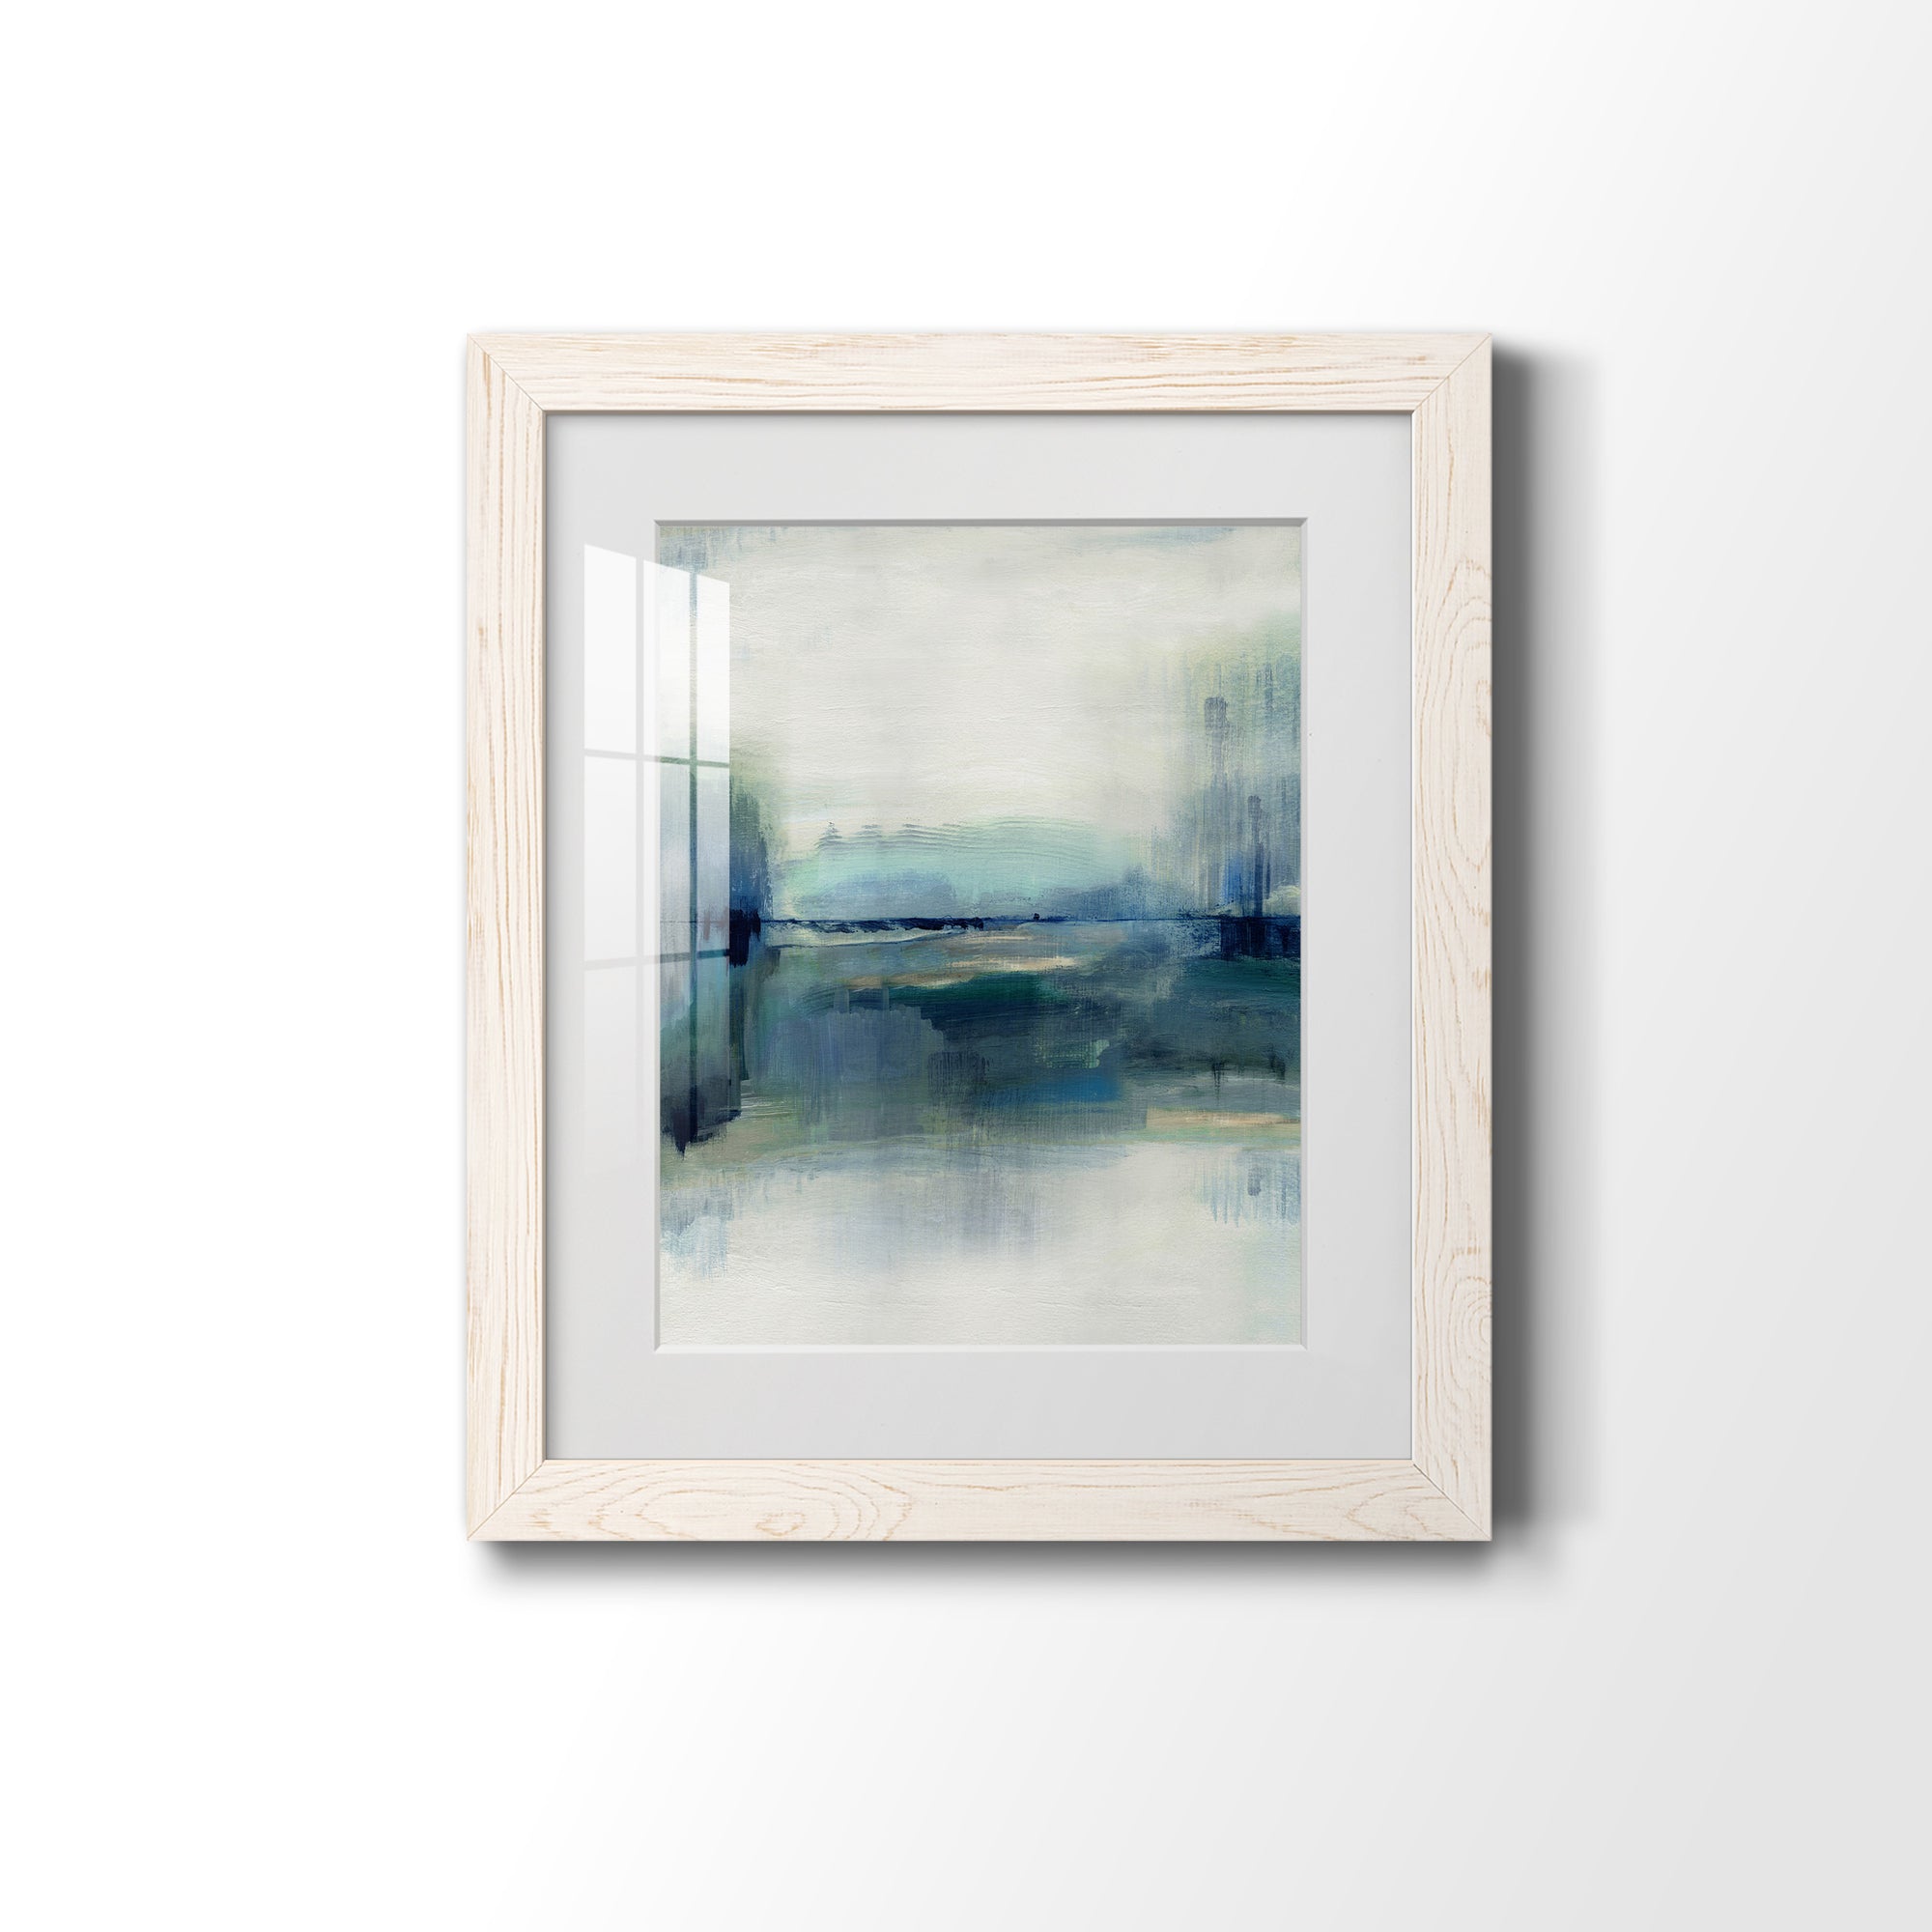 Indigo Meadow - Premium Framed Print - Distressed Barnwood Frame - Ready to Hang